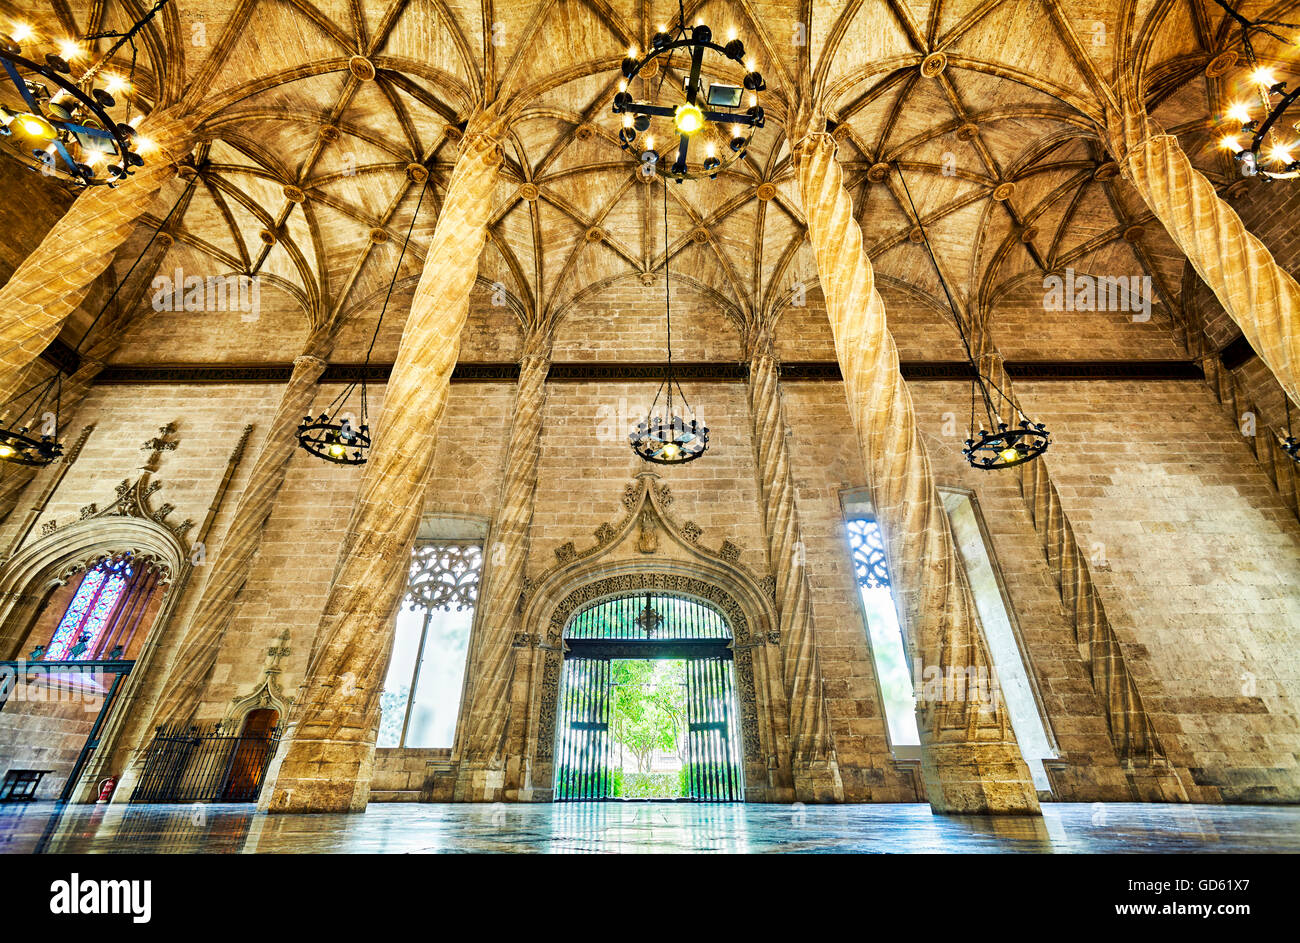 Der Vertrag-Halle auf der Llotja De La Seda Seide Börsengebäude. UNESCO-Weltkulturerbe. Valencia. Spanien Stockfoto